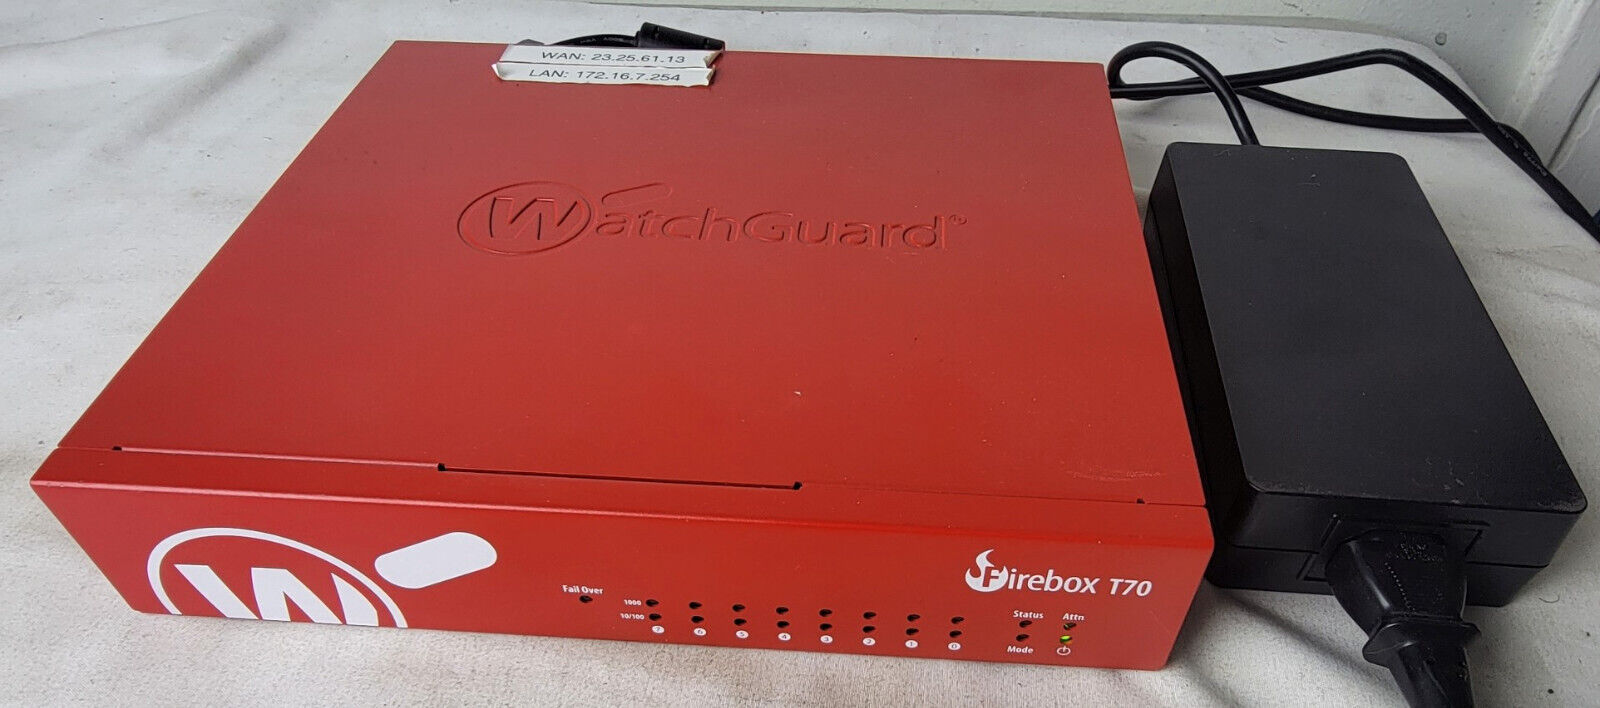 Watchguard Firebox T70 Network Security/Firewall With Power Adapter cord K42